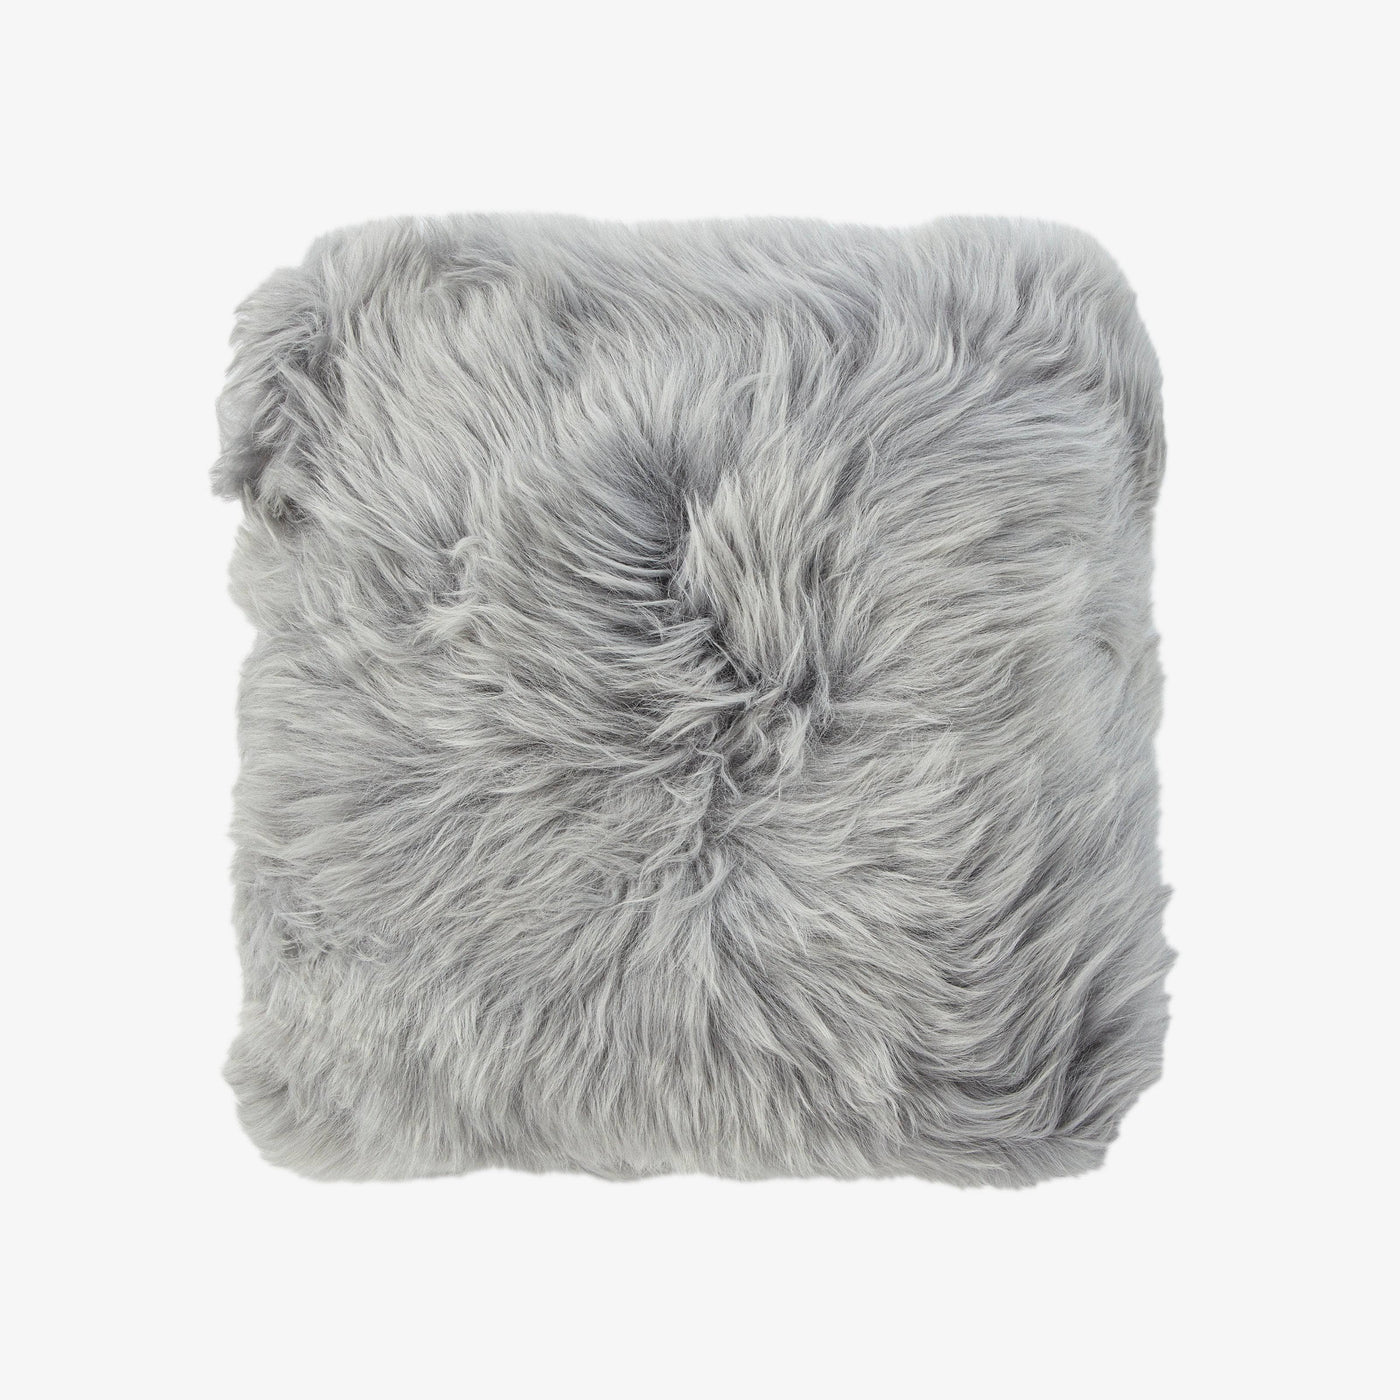 Follois Cushion, Grey, 40x45 cm 1